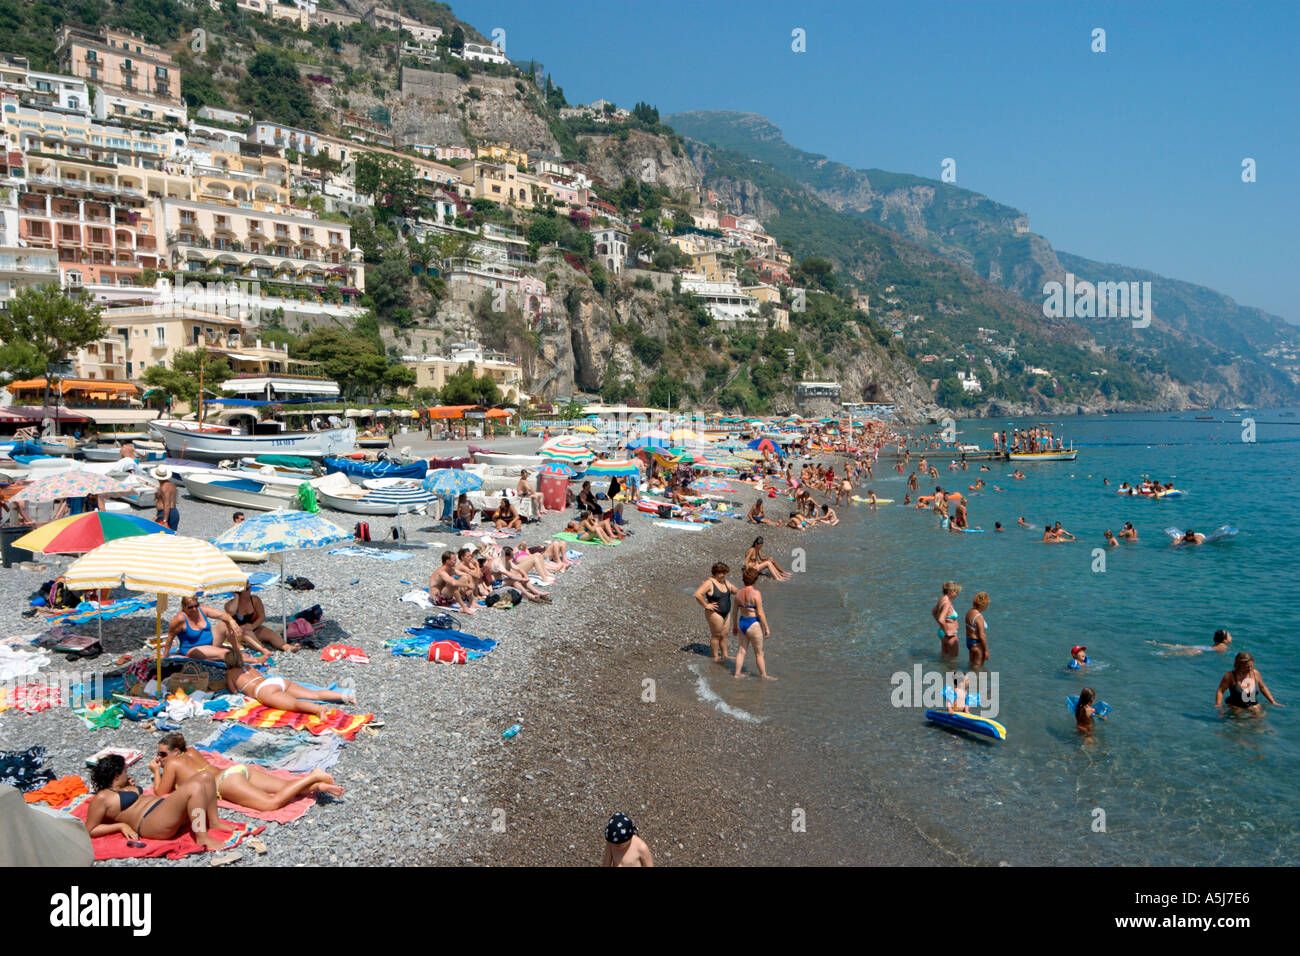 Spiaggia di Positano, Costiera Amalfitana (Costiera Amalfitana), Riviera Napoletana, Italia Foto Stock